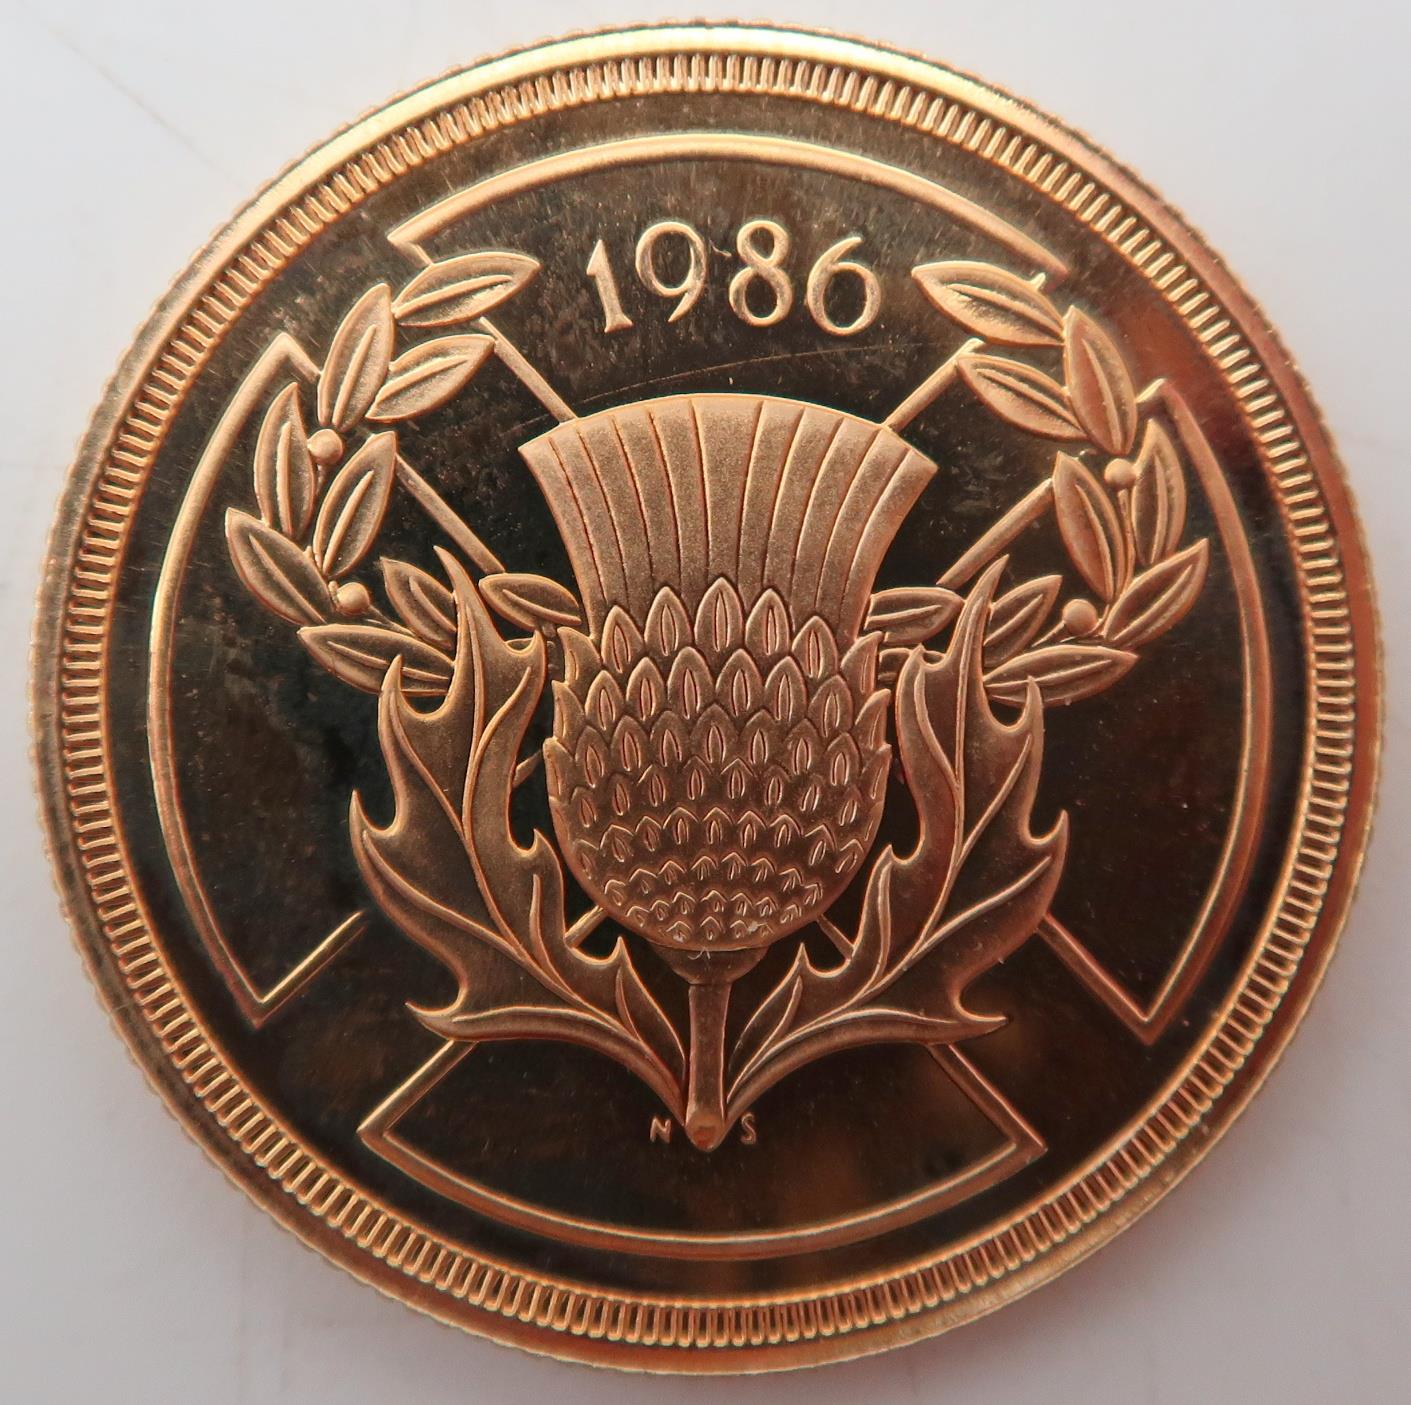 ELIZABETH II Commonwealth Games; Gold Proof 2 Pounds XIII Commonwealth Games, Edinburgh 1986 Obverse - Image 2 of 3